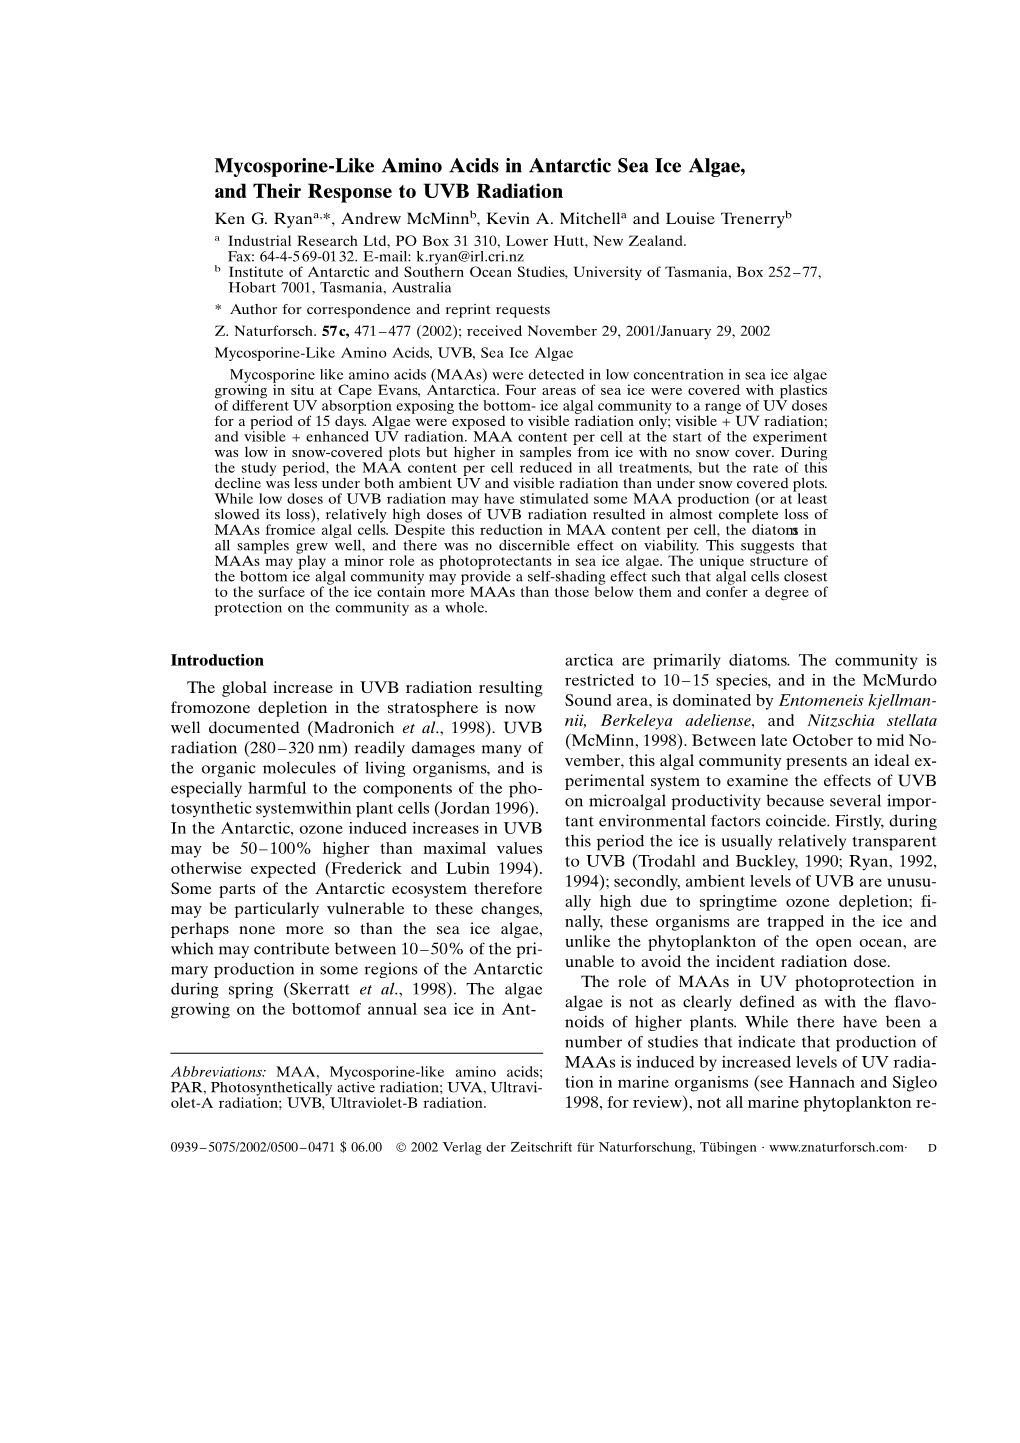 Mycosporine-Like Amino Acids in Antarctic Sea Ice Algae, and Their Response to UVB Radiation Ken G